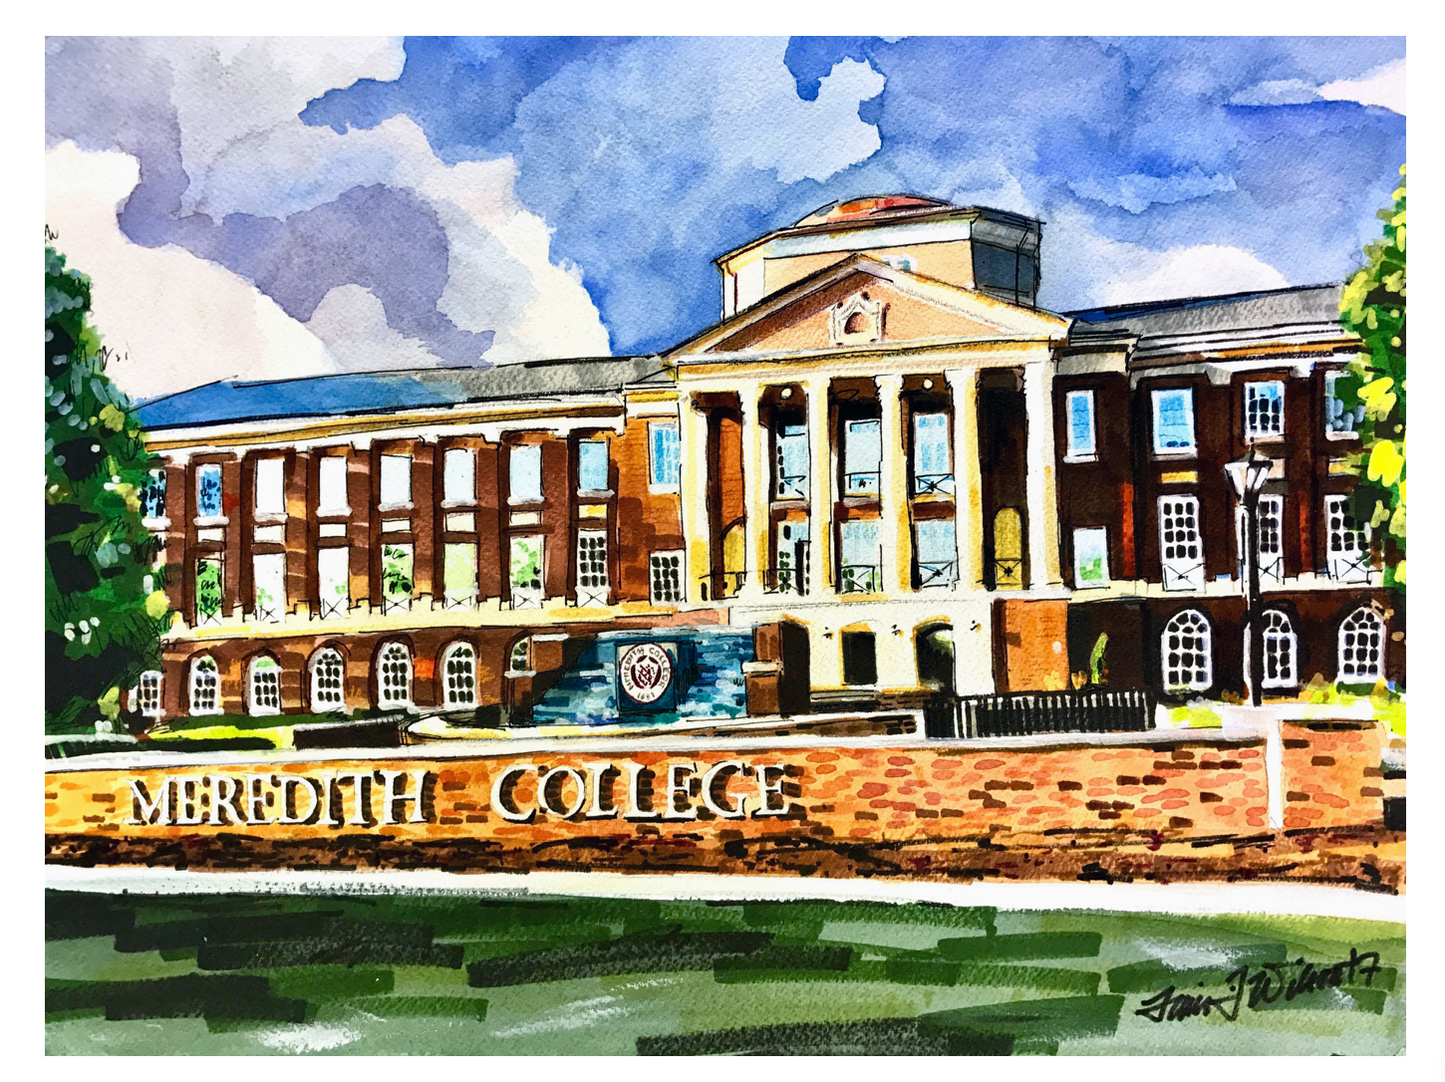 Meredith College Card Raleigh, North Carolina